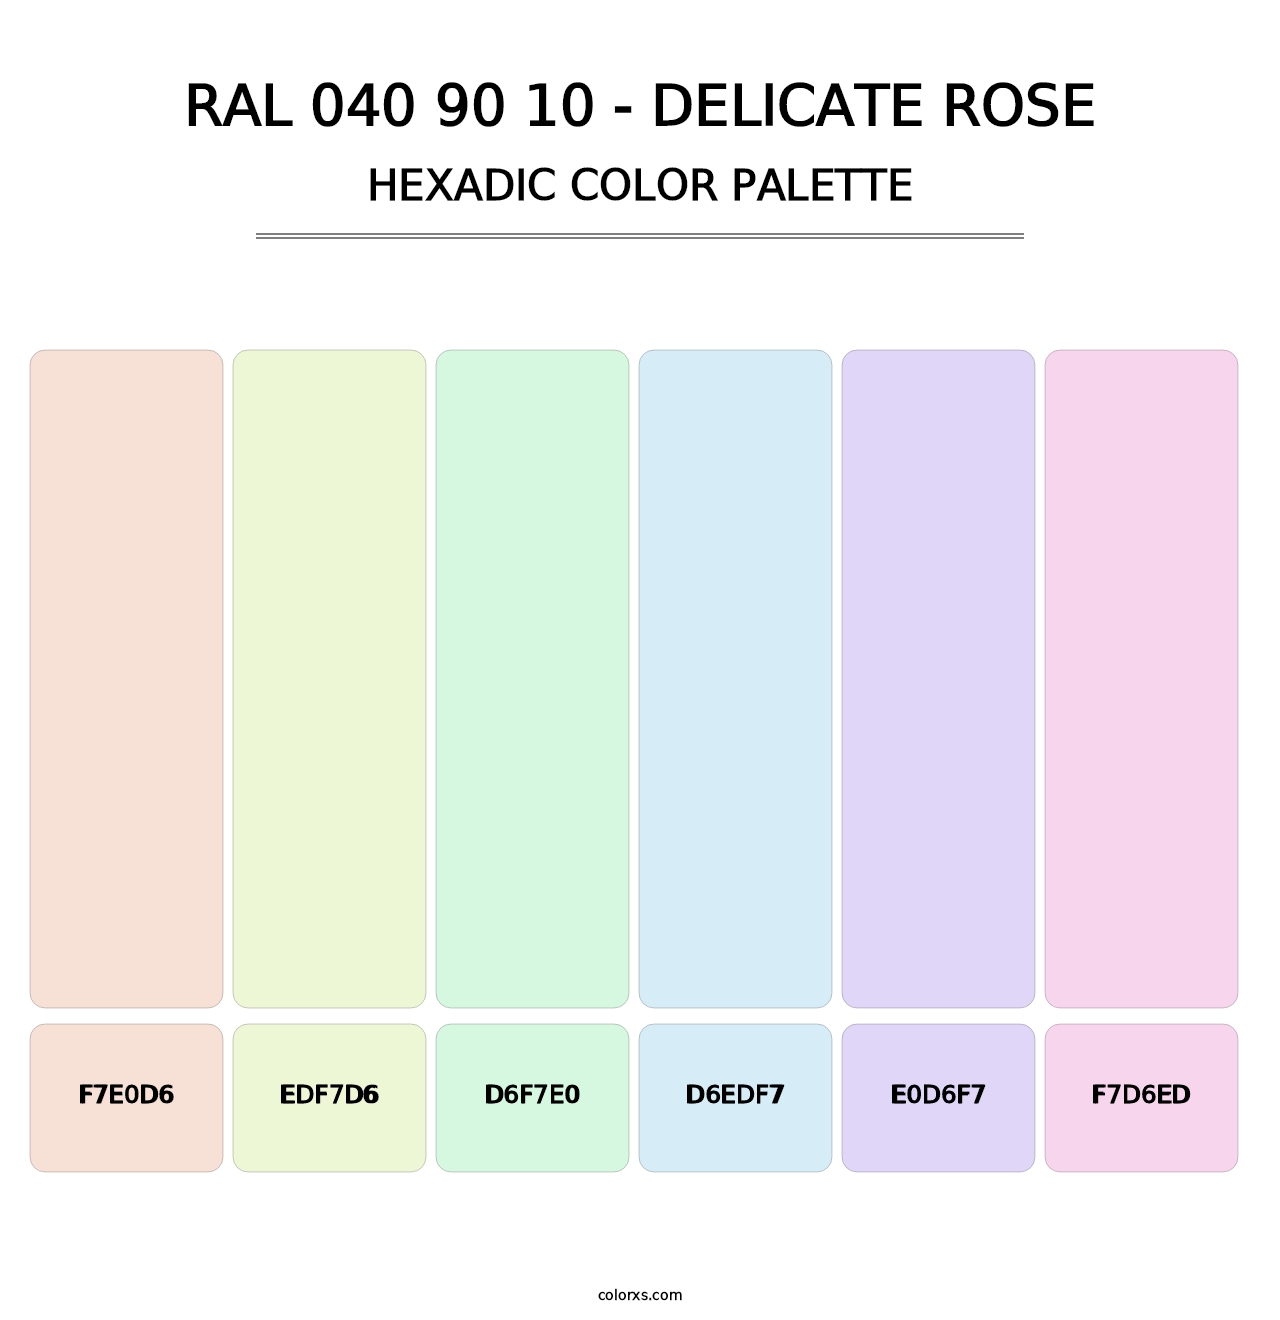 RAL 040 90 10 - Delicate Rose - Hexadic Color Palette